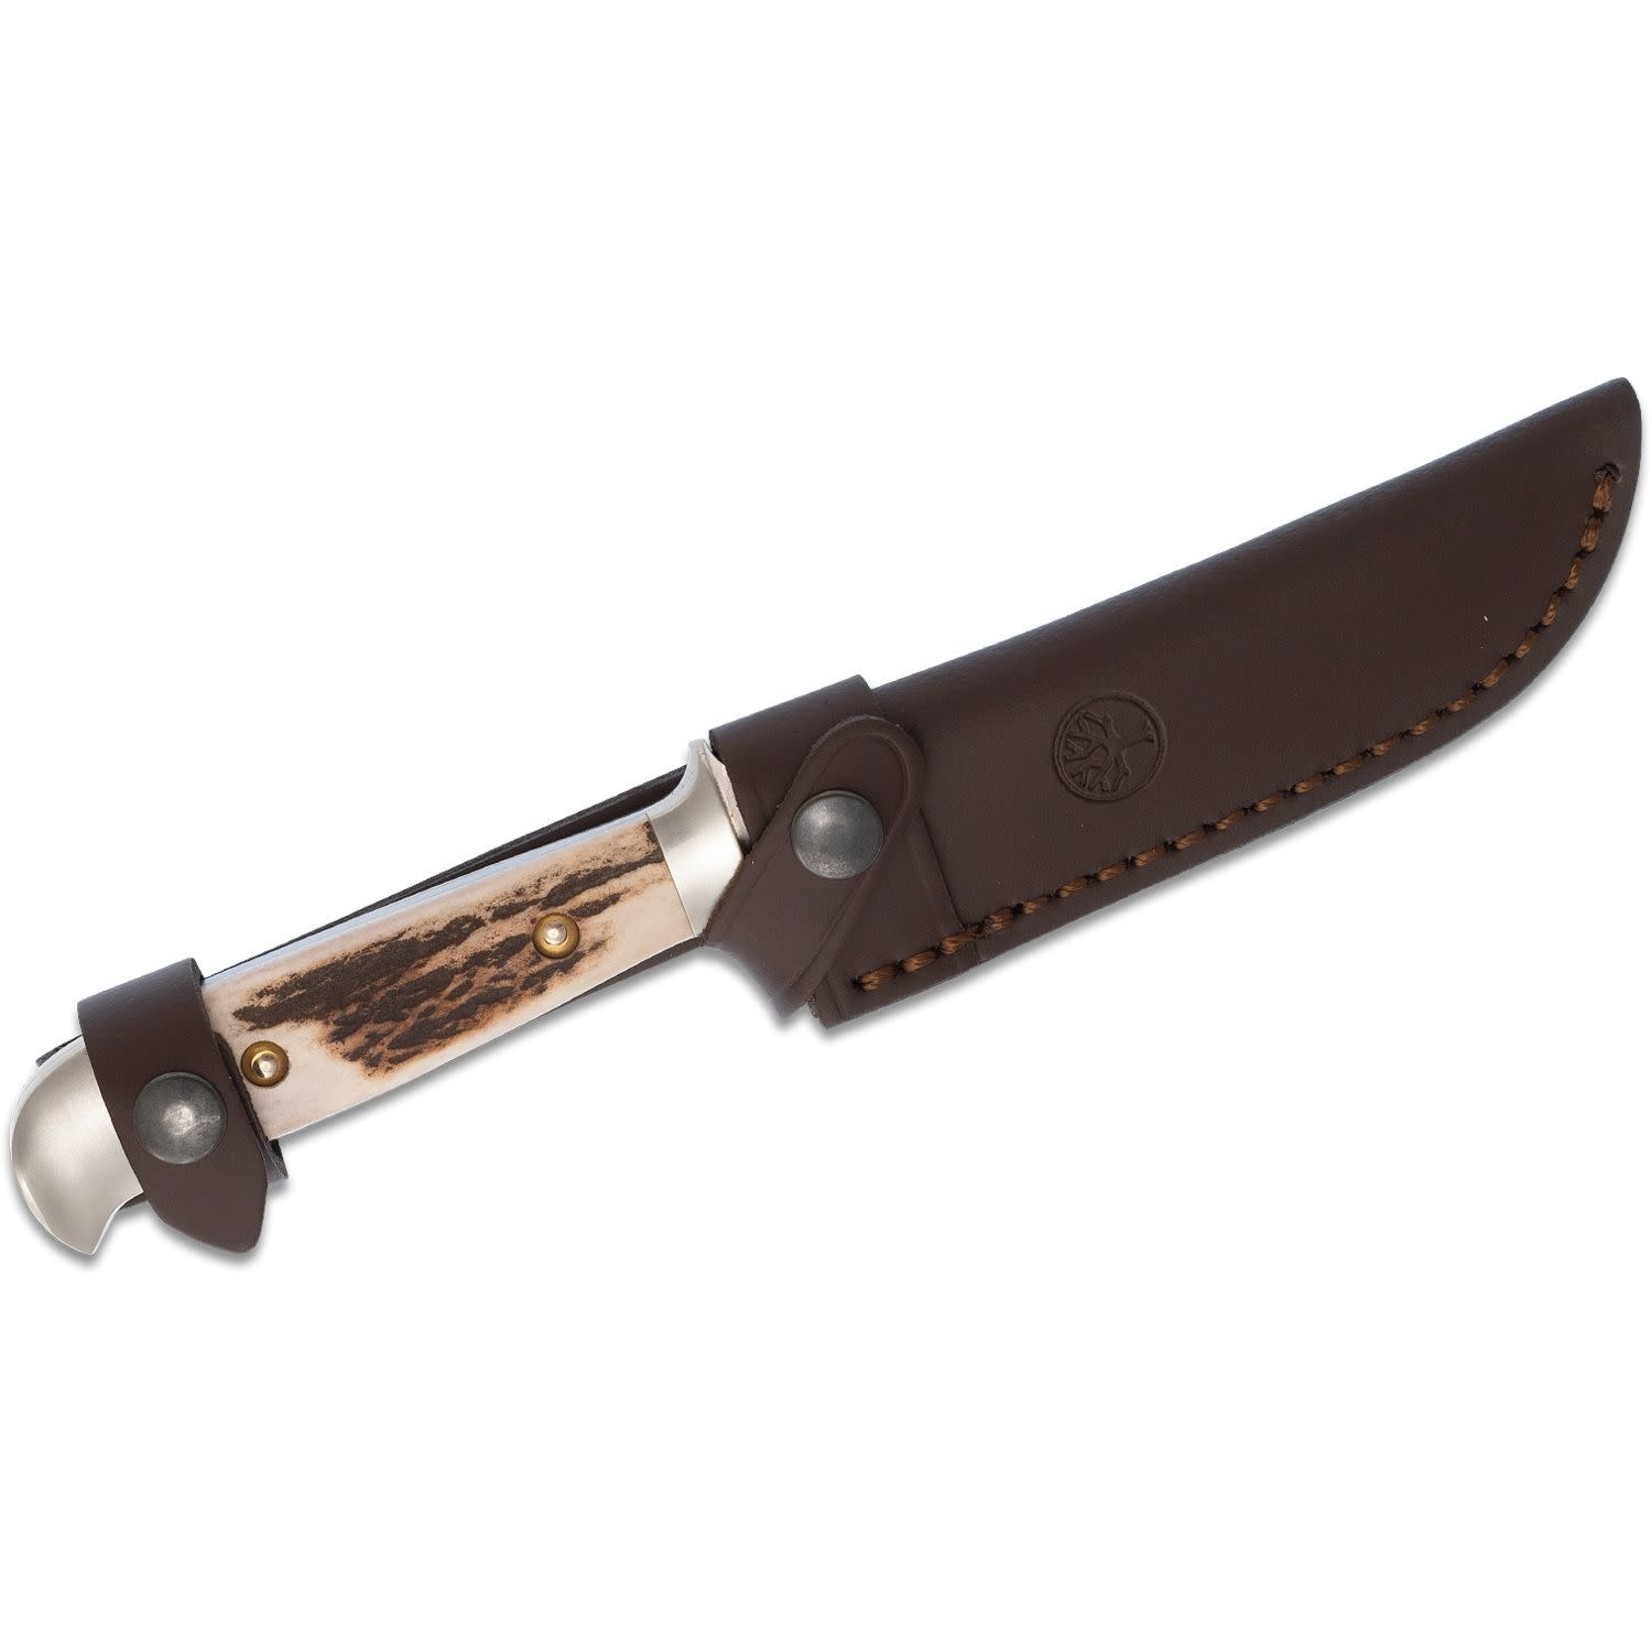 boker Ranger's Nicker Hunter Fixed Blade Knife 4.375" Satin, Stag Handles, Black Leather Sheath